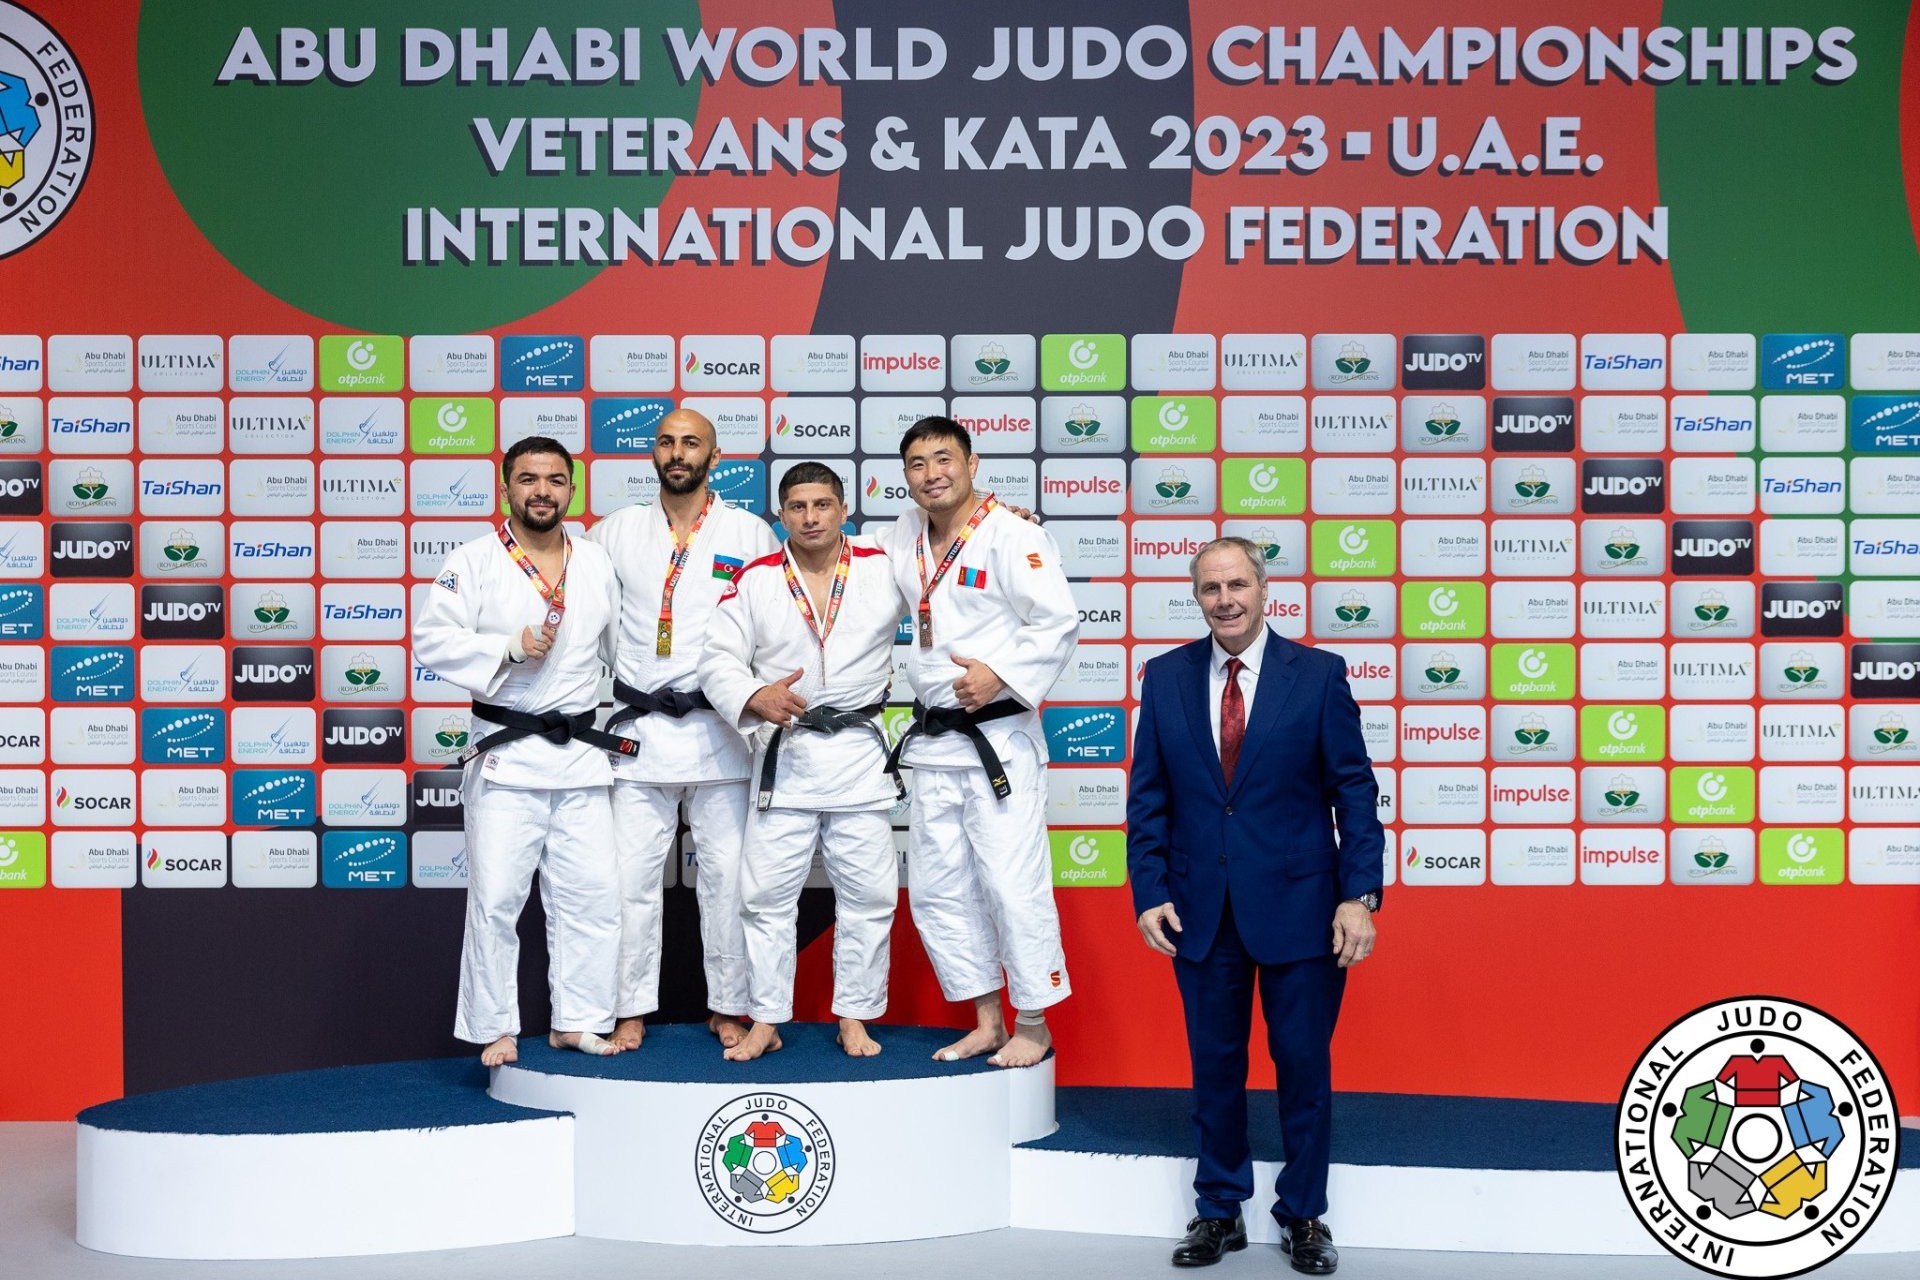 Azerbaijan's veteran judokas finished the World Championship with 11 medals